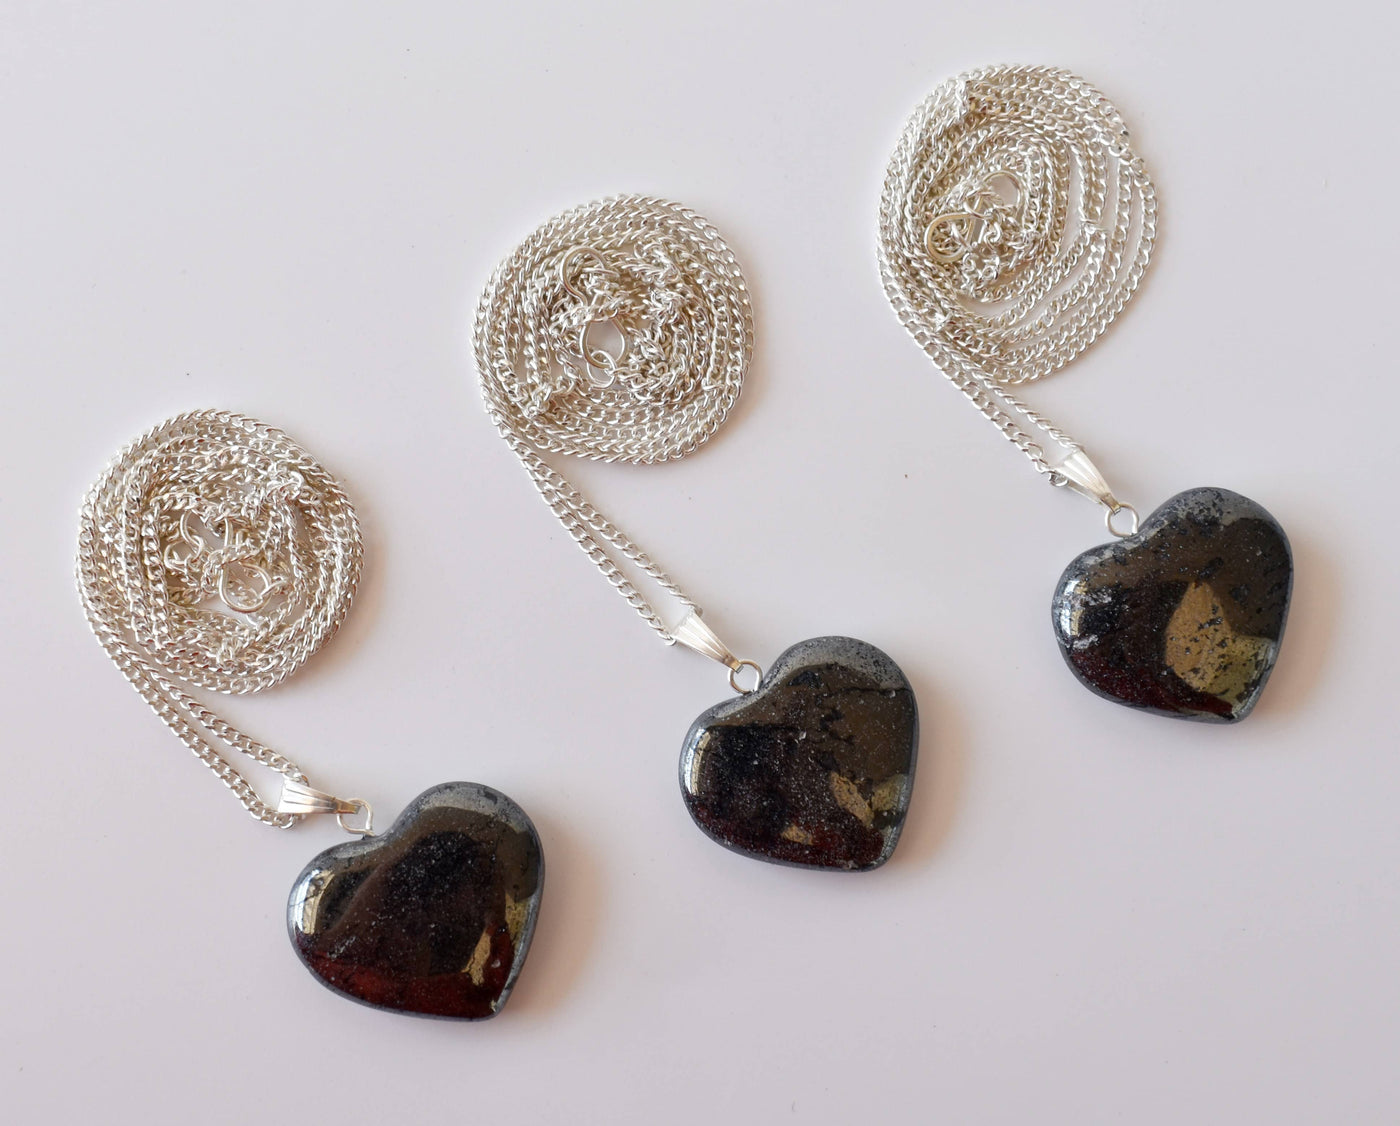 Genuine Hematite Crystal Heart Pendant, Genuine Heart Shaped Necklaces